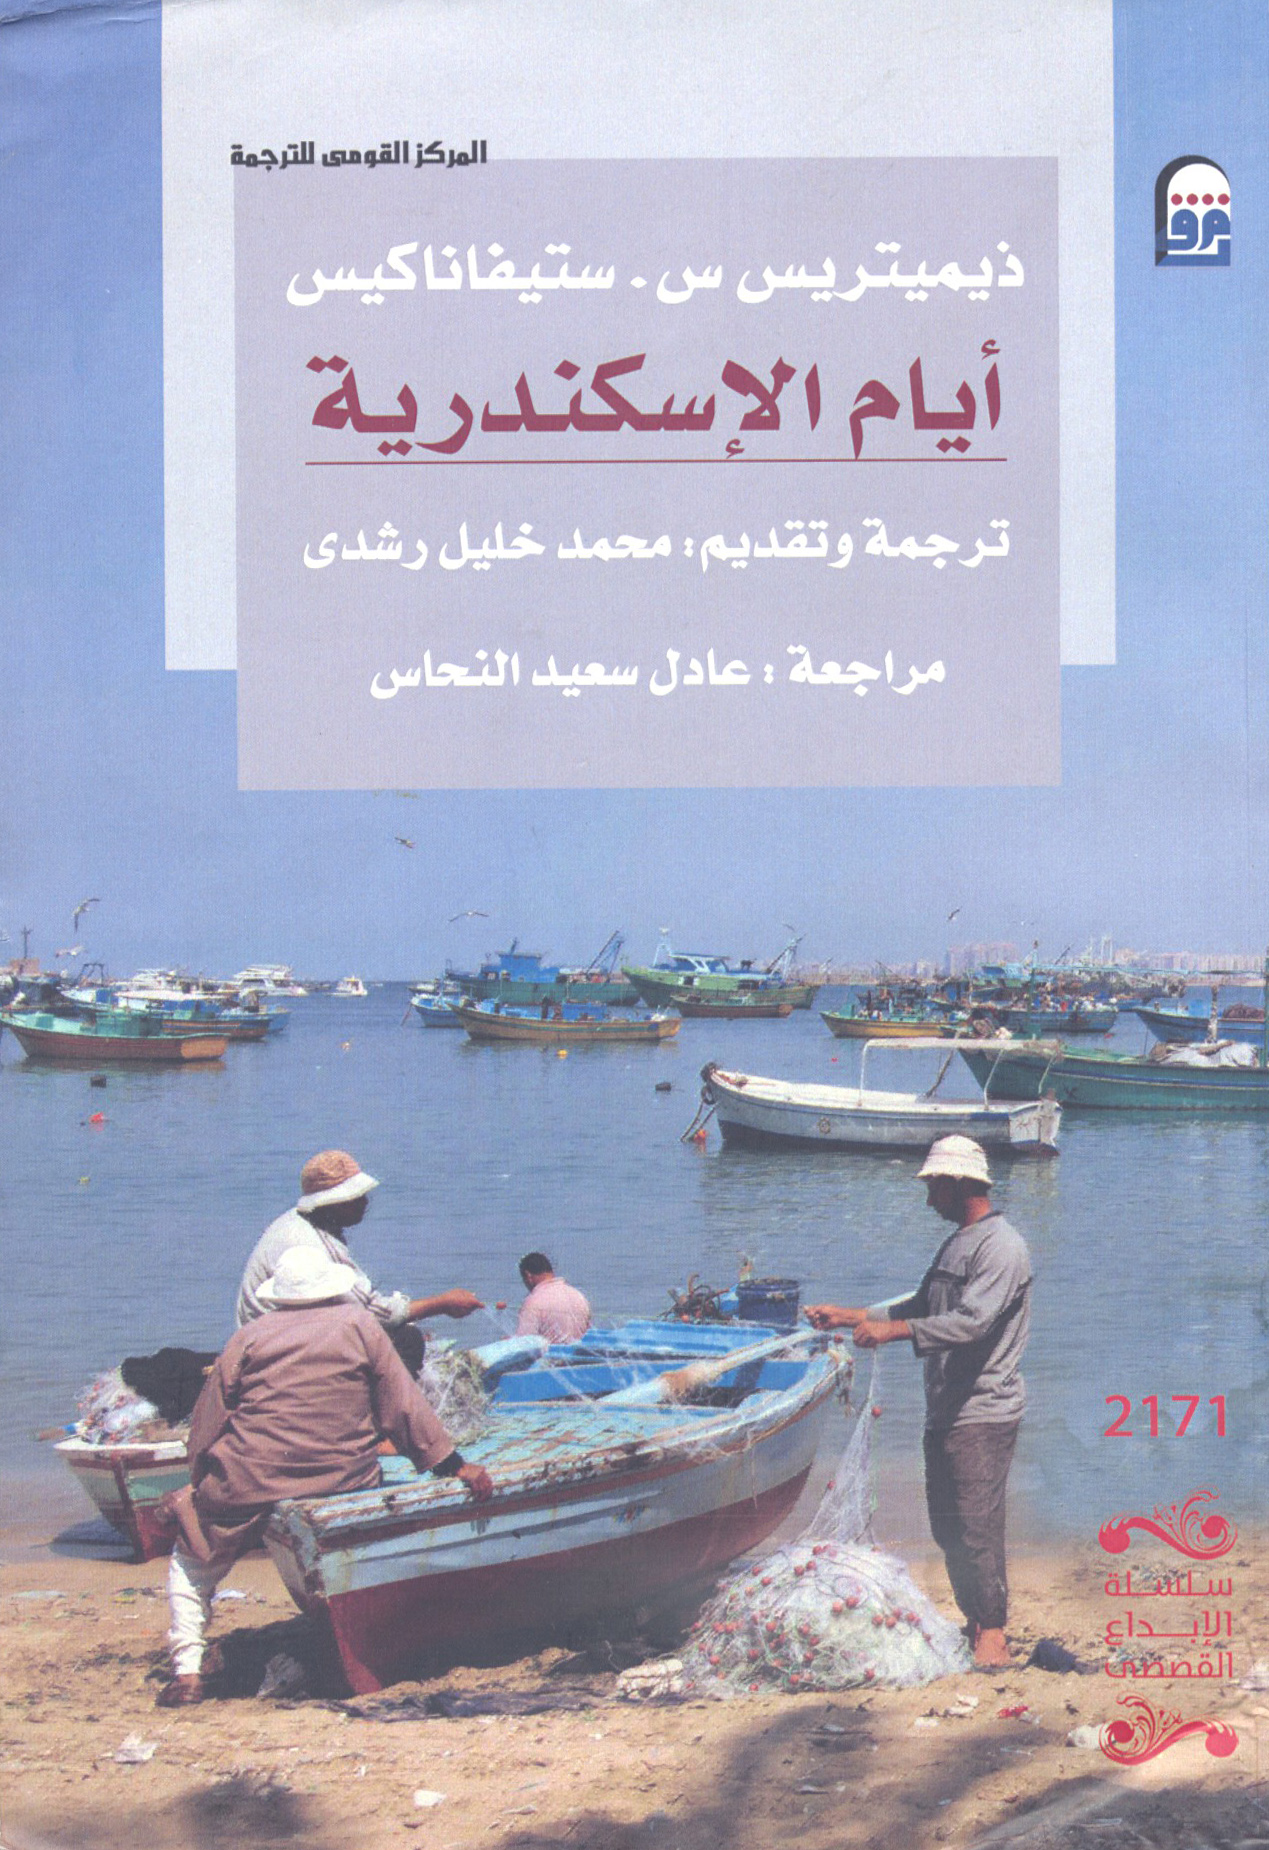 JOURS D’ALEXANDRIE Εθνικός Οργανισμός Μετάφρασης της Αιγύπτου